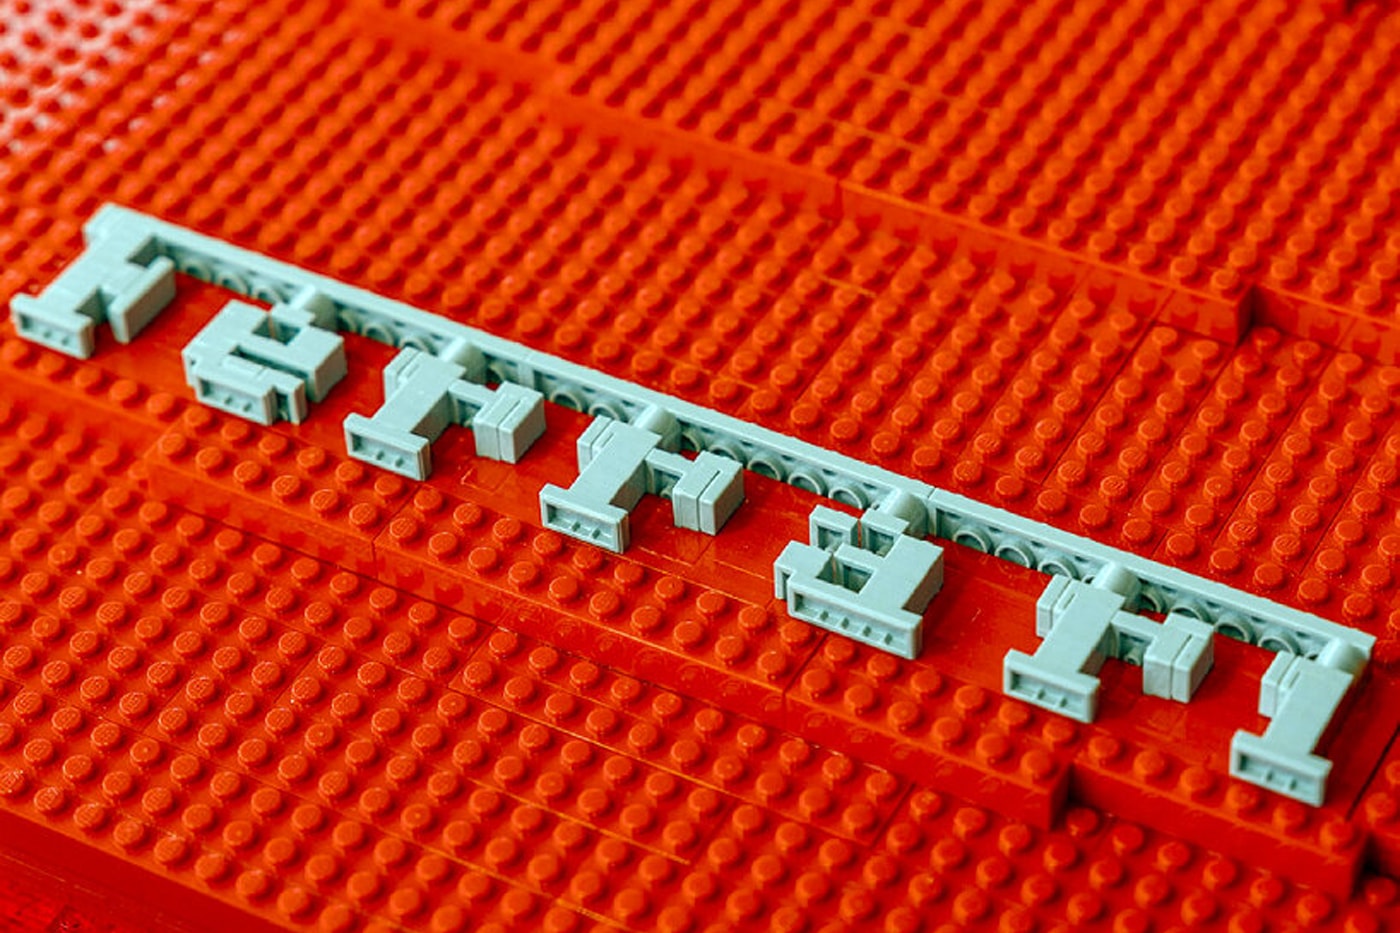 LEGO Ferrari Monza SP1 Legoland denmark nicklas nielsen full size look info